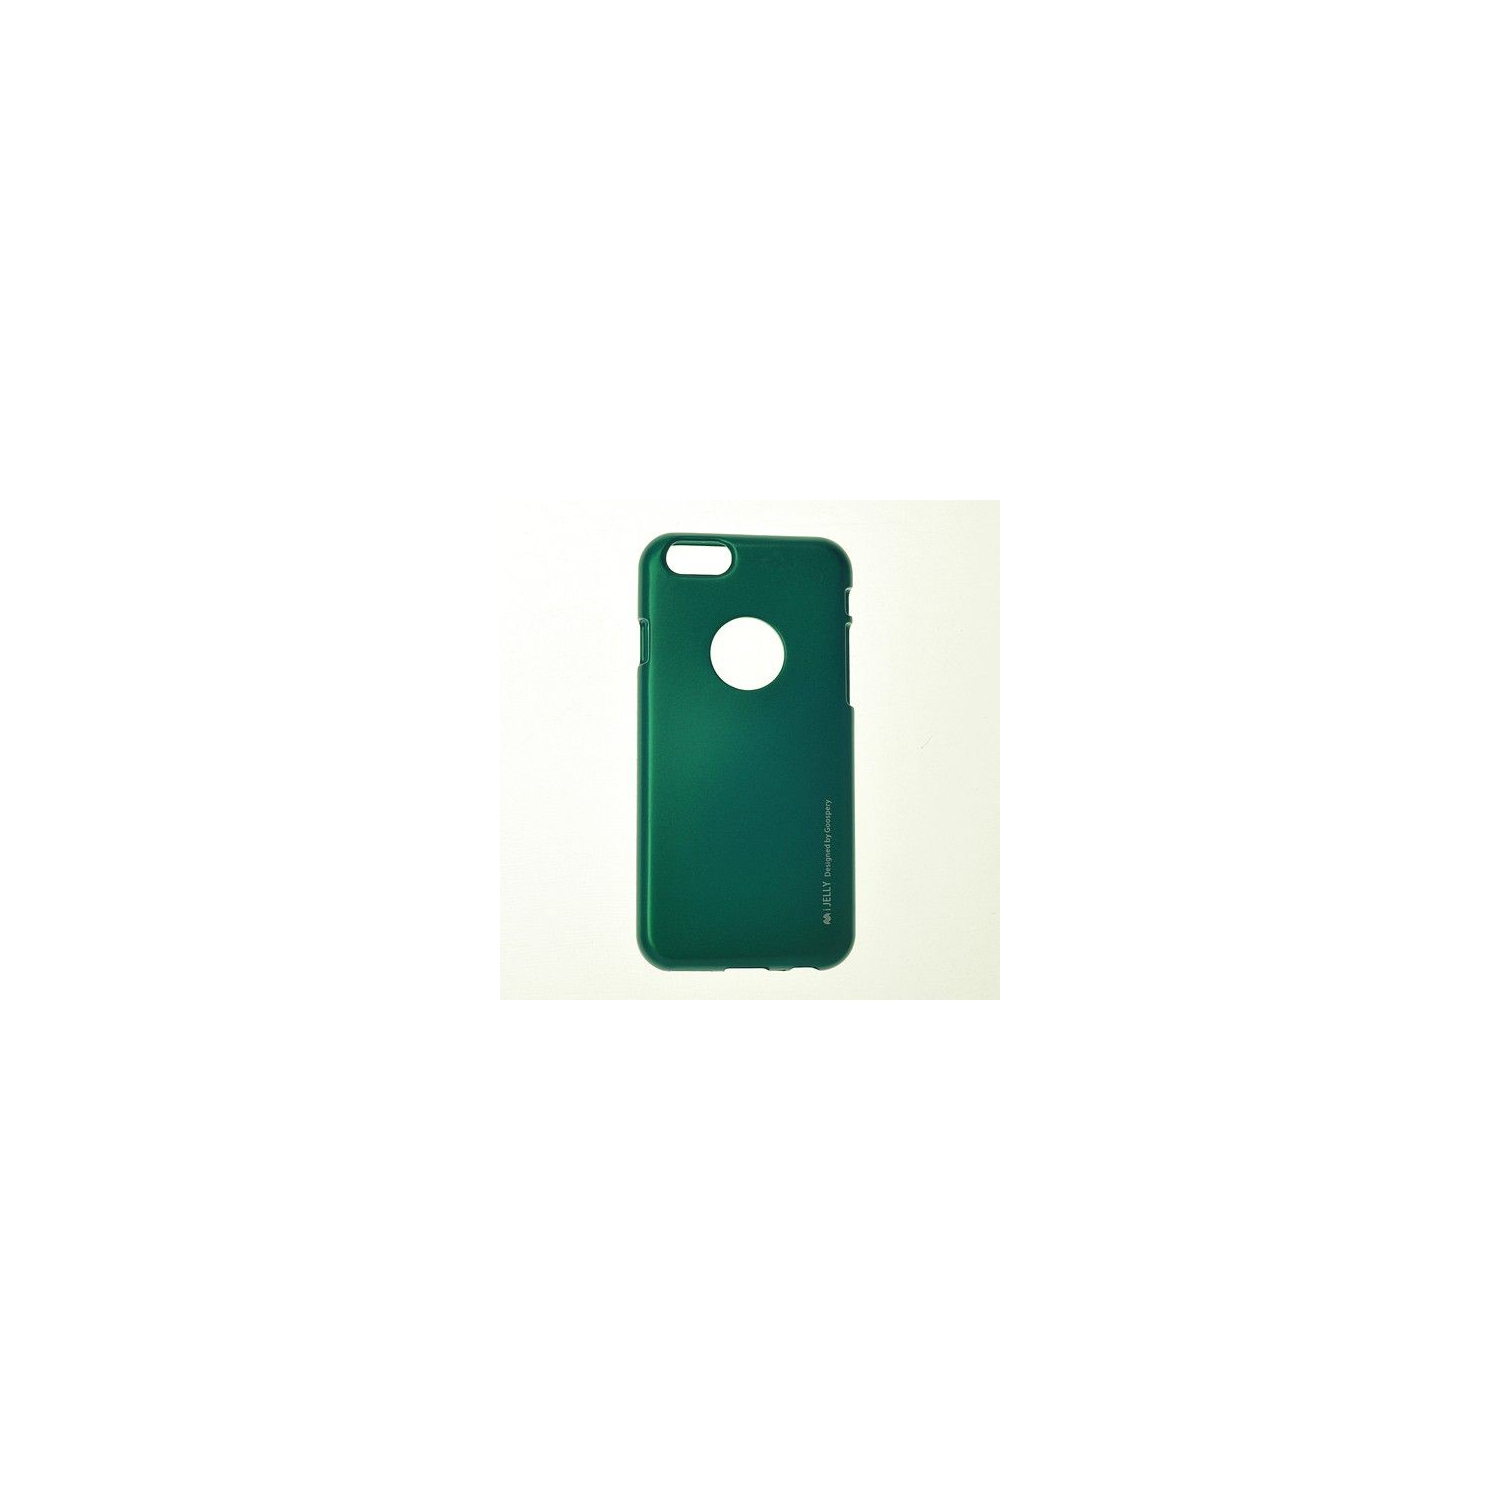 Iphone 5/s/SE Goospery iJelly Metal Case, Green